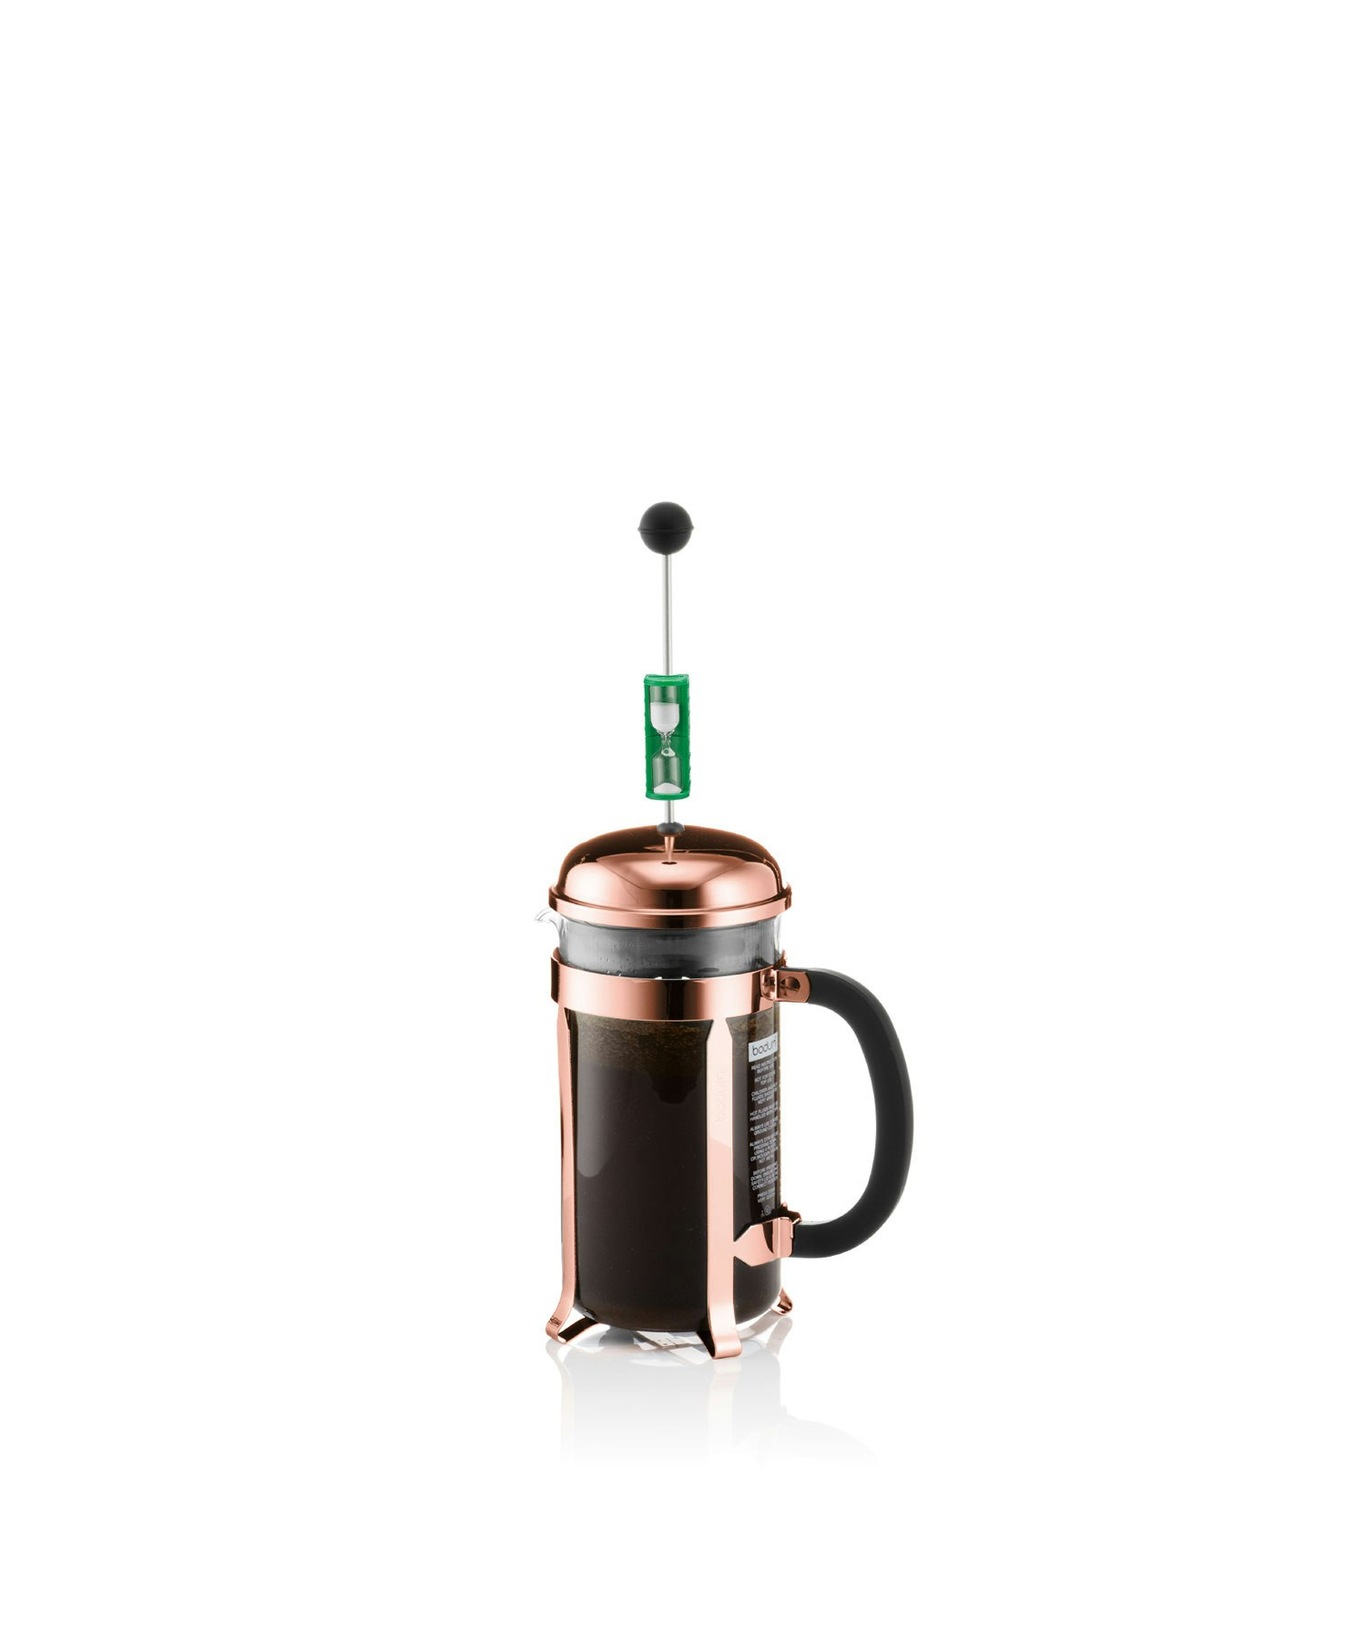 https://royaldesign.com/image/2/bodum-chambord-coffee-maker-copper-3?w=800&quality=80